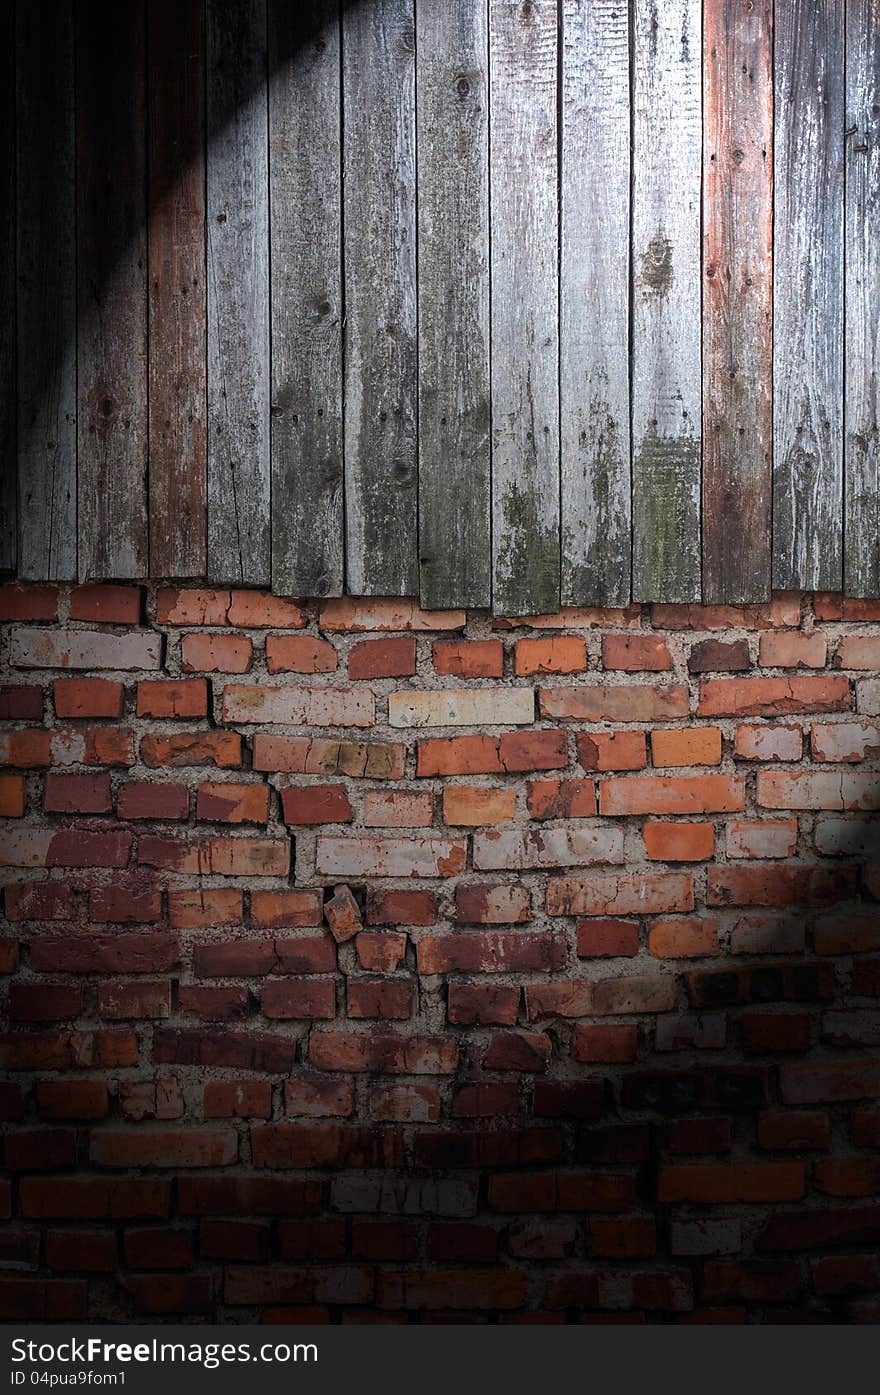 A spotlight on a dark grungy wood and brick wall. A spotlight on a dark grungy wood and brick wall